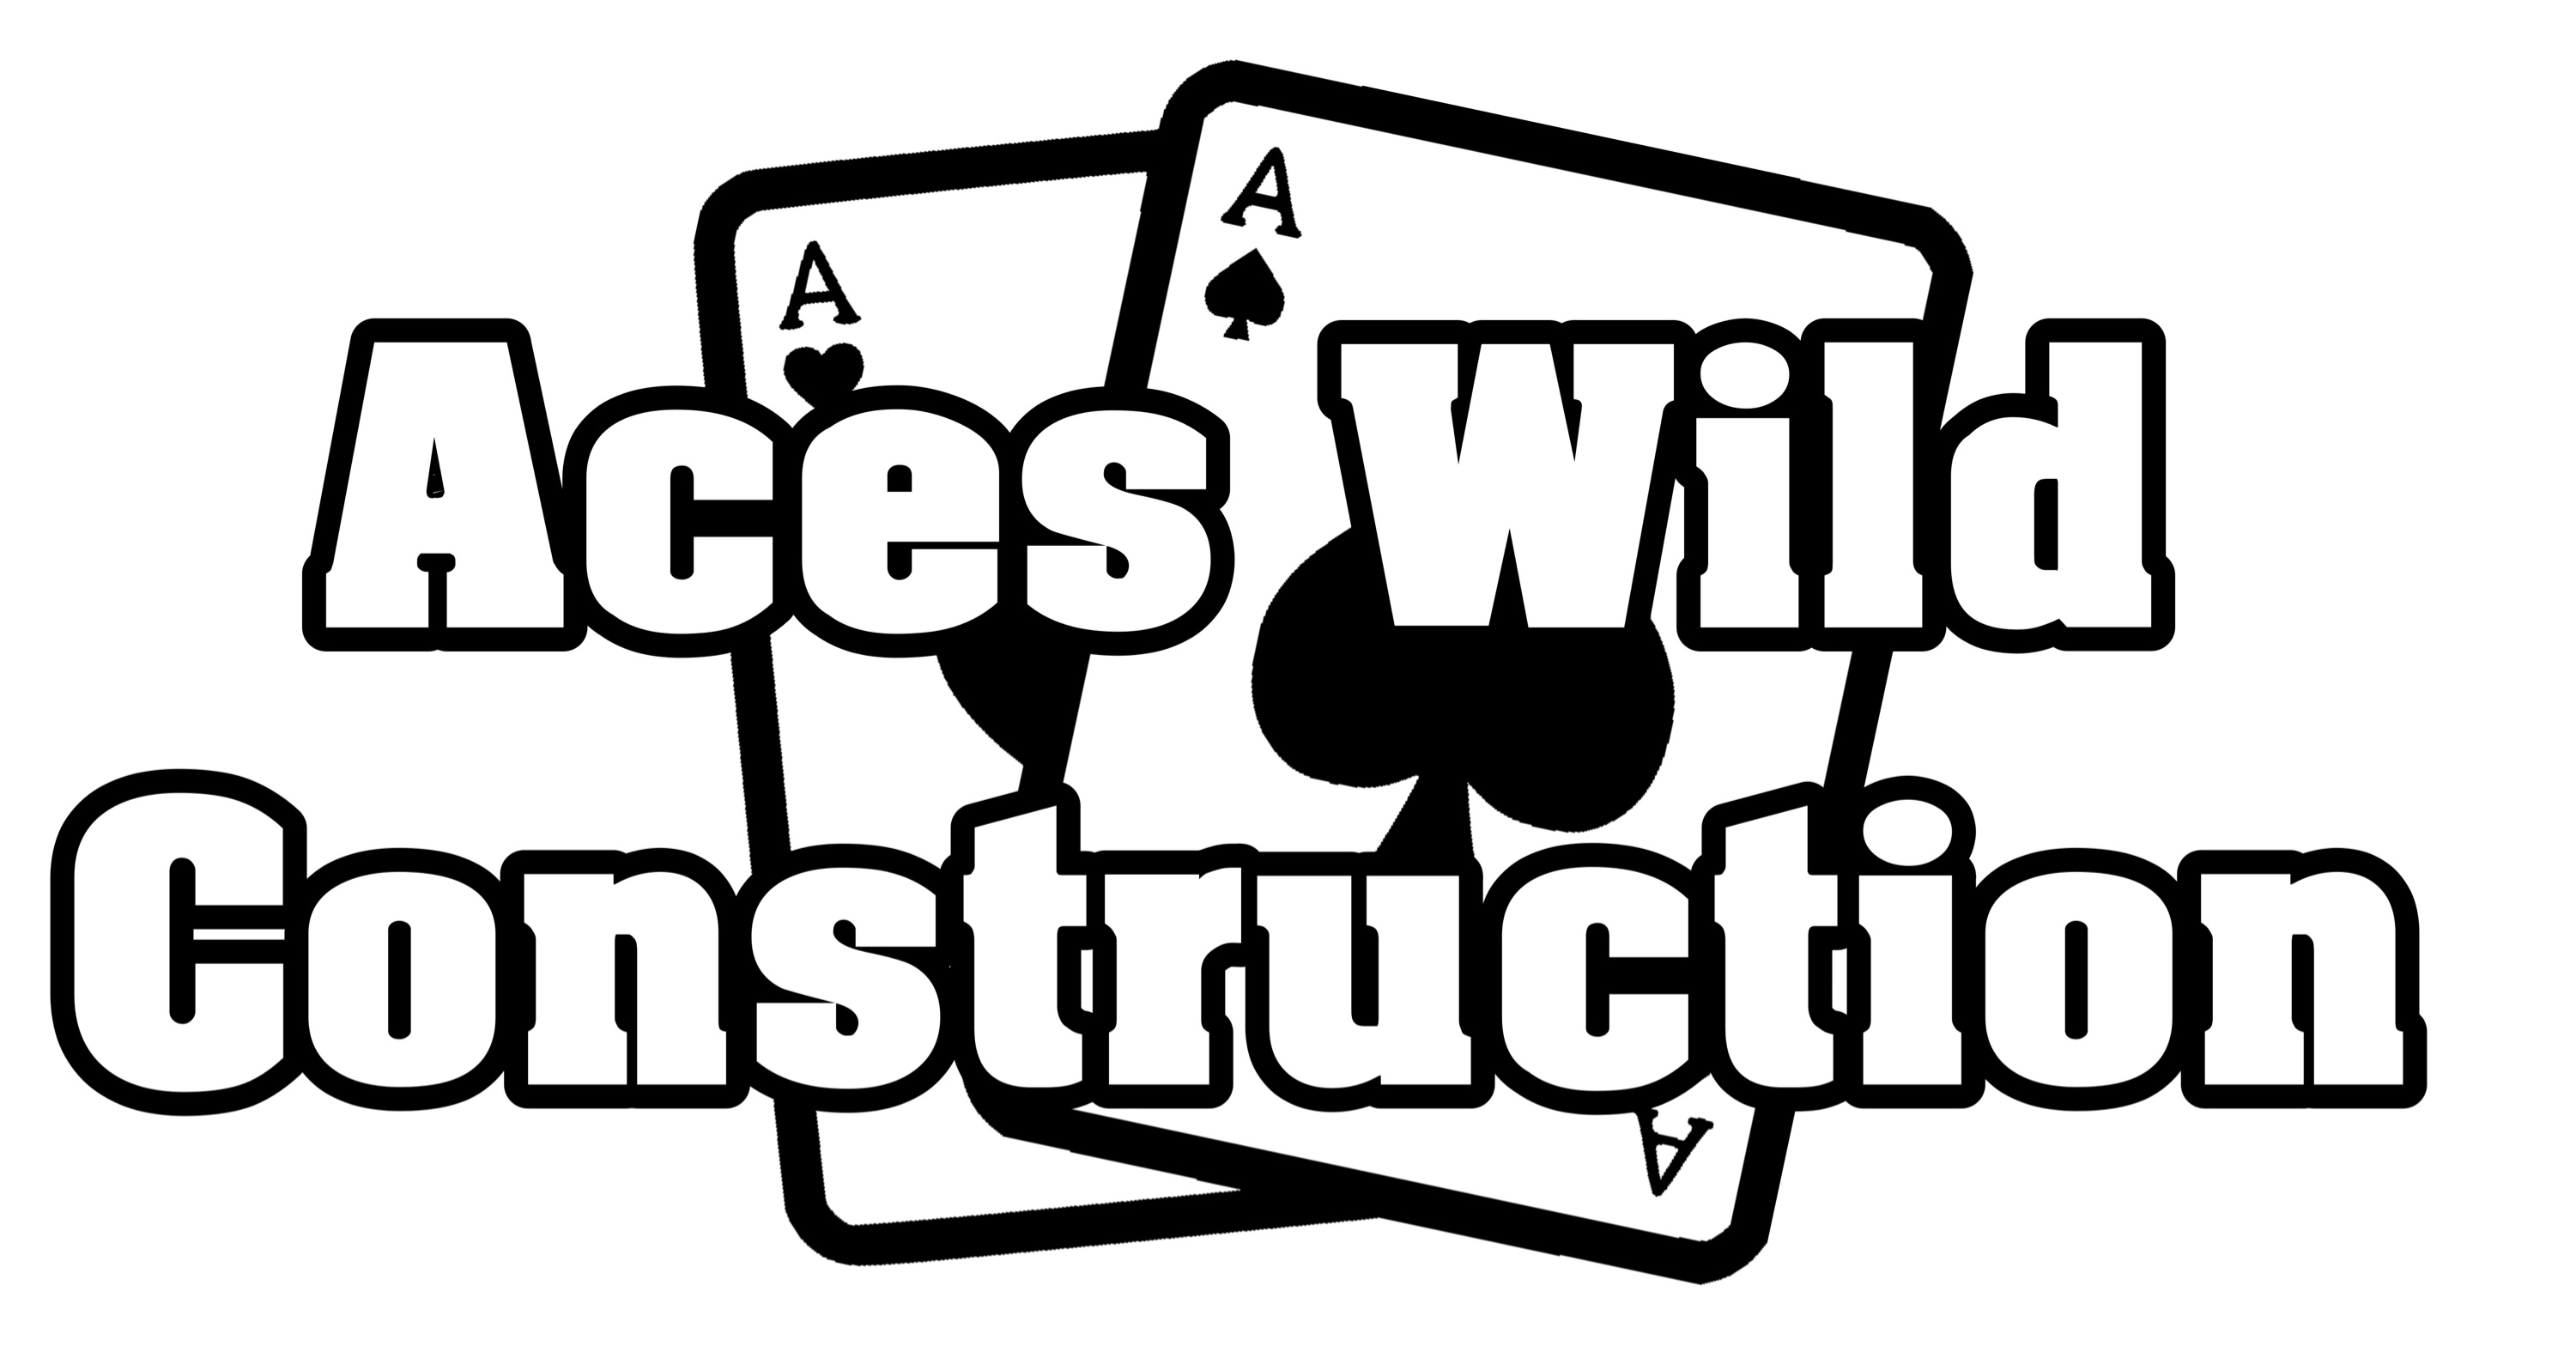 Aces Wild Construction Logo